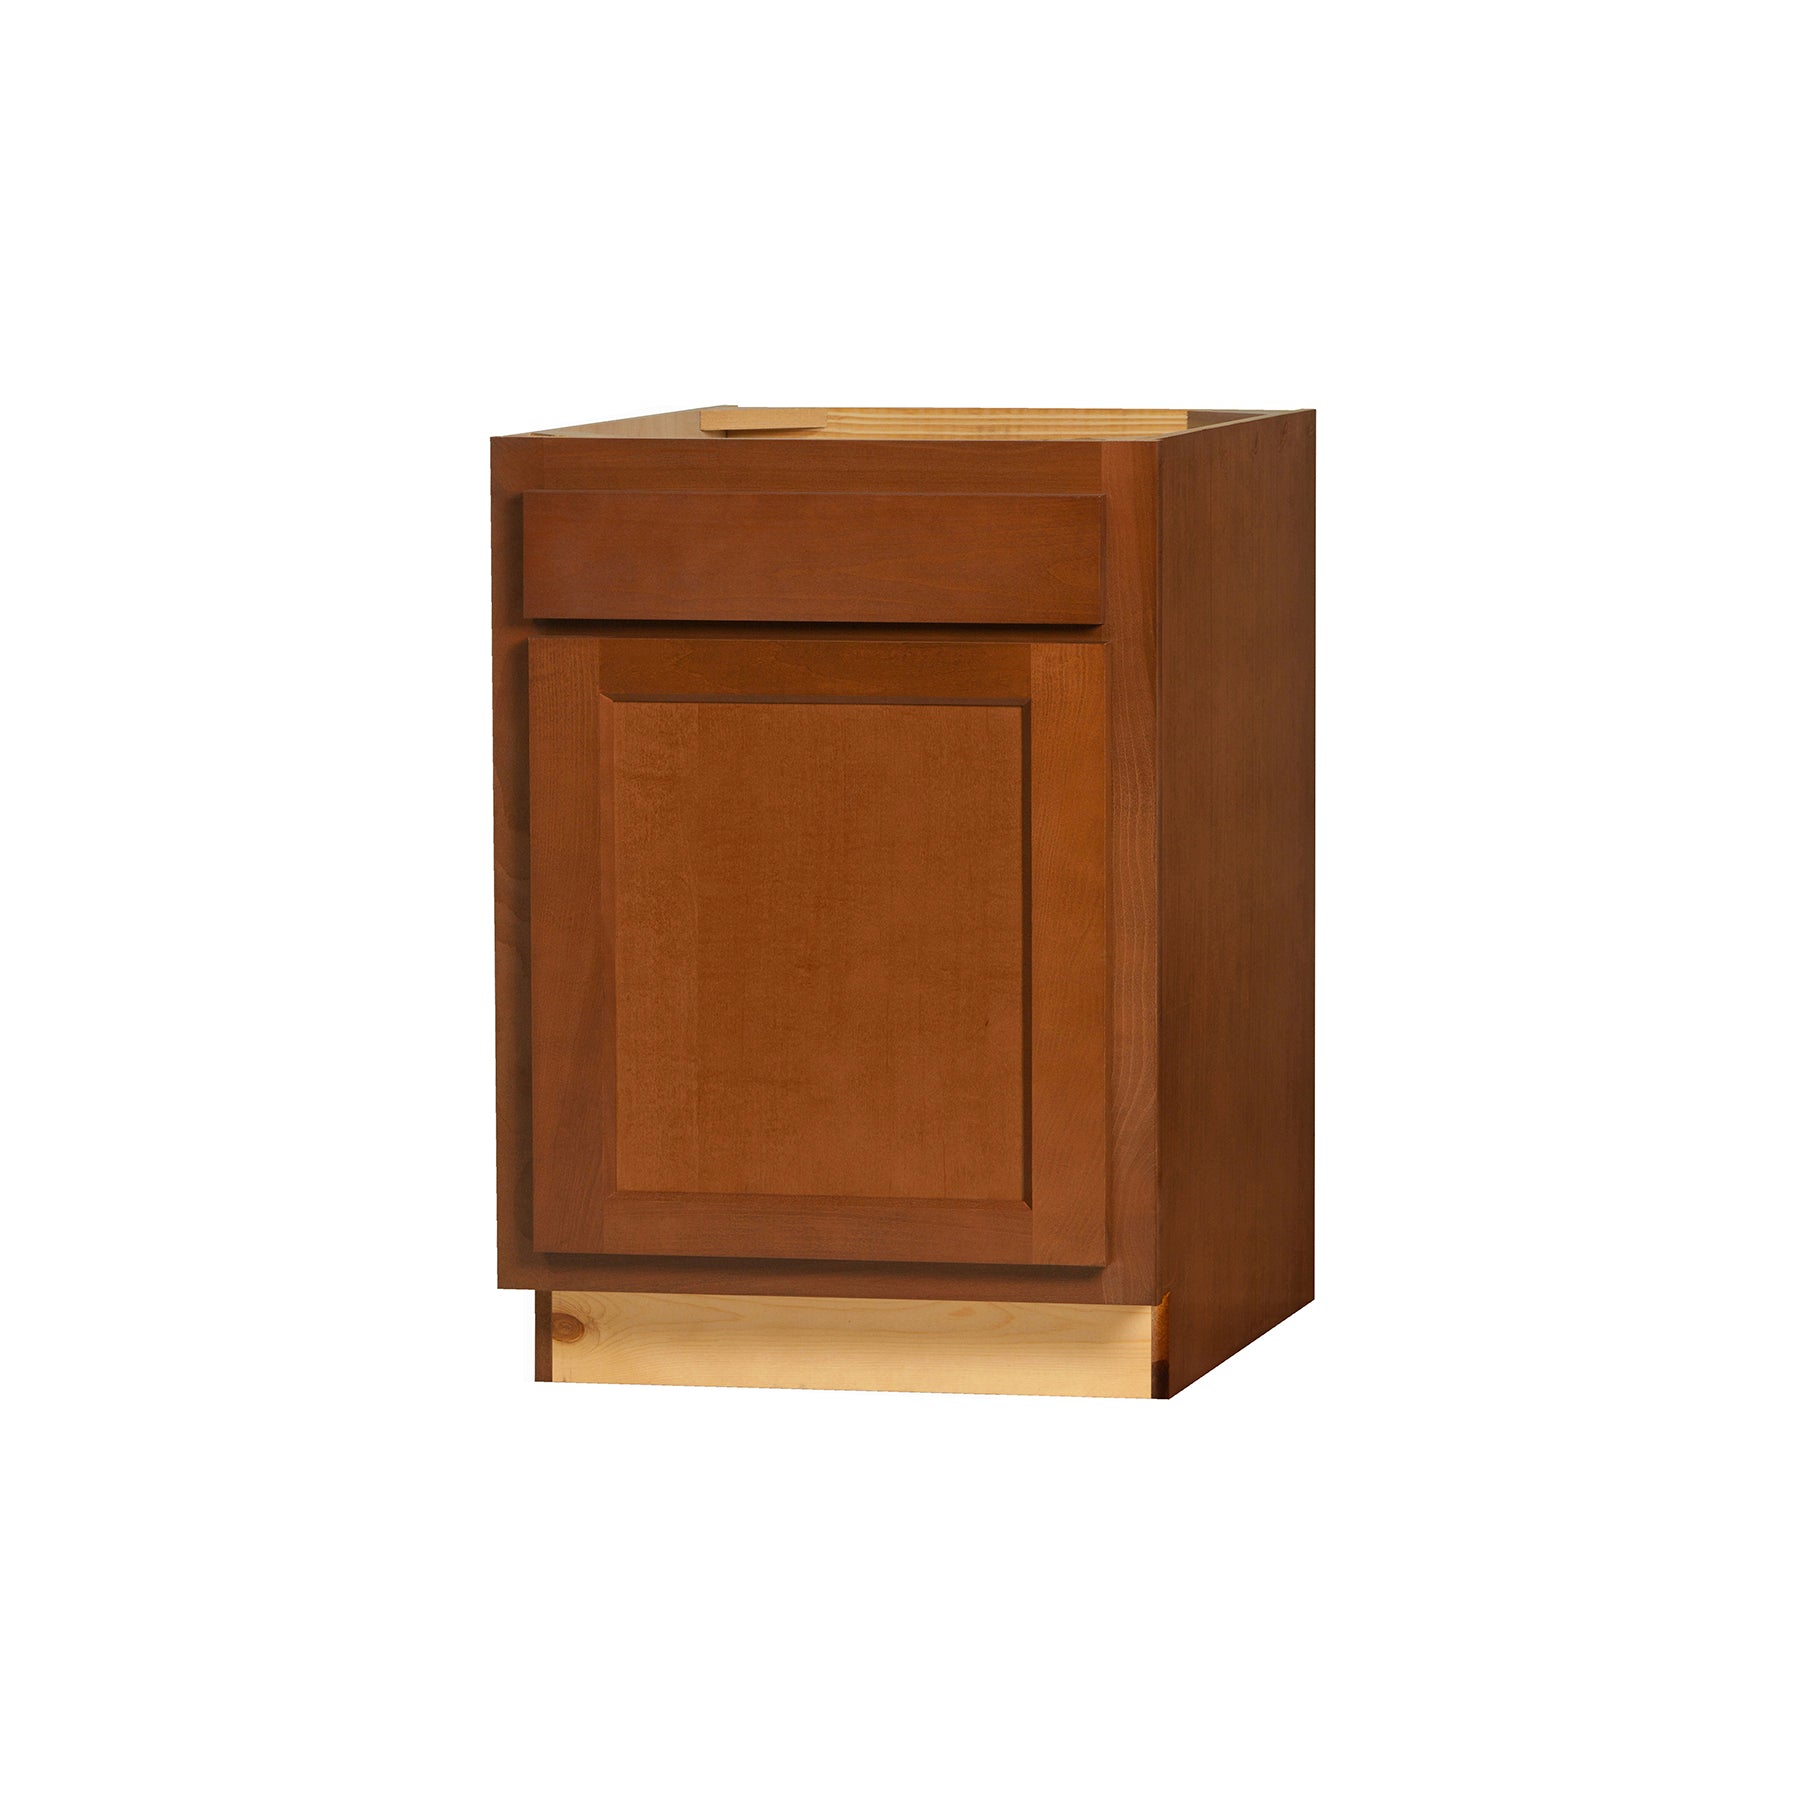 24 Inch Base Cabinets - Glenwood Shaker - 24 Inch W x 24 Inch D x 34.5 Inch H